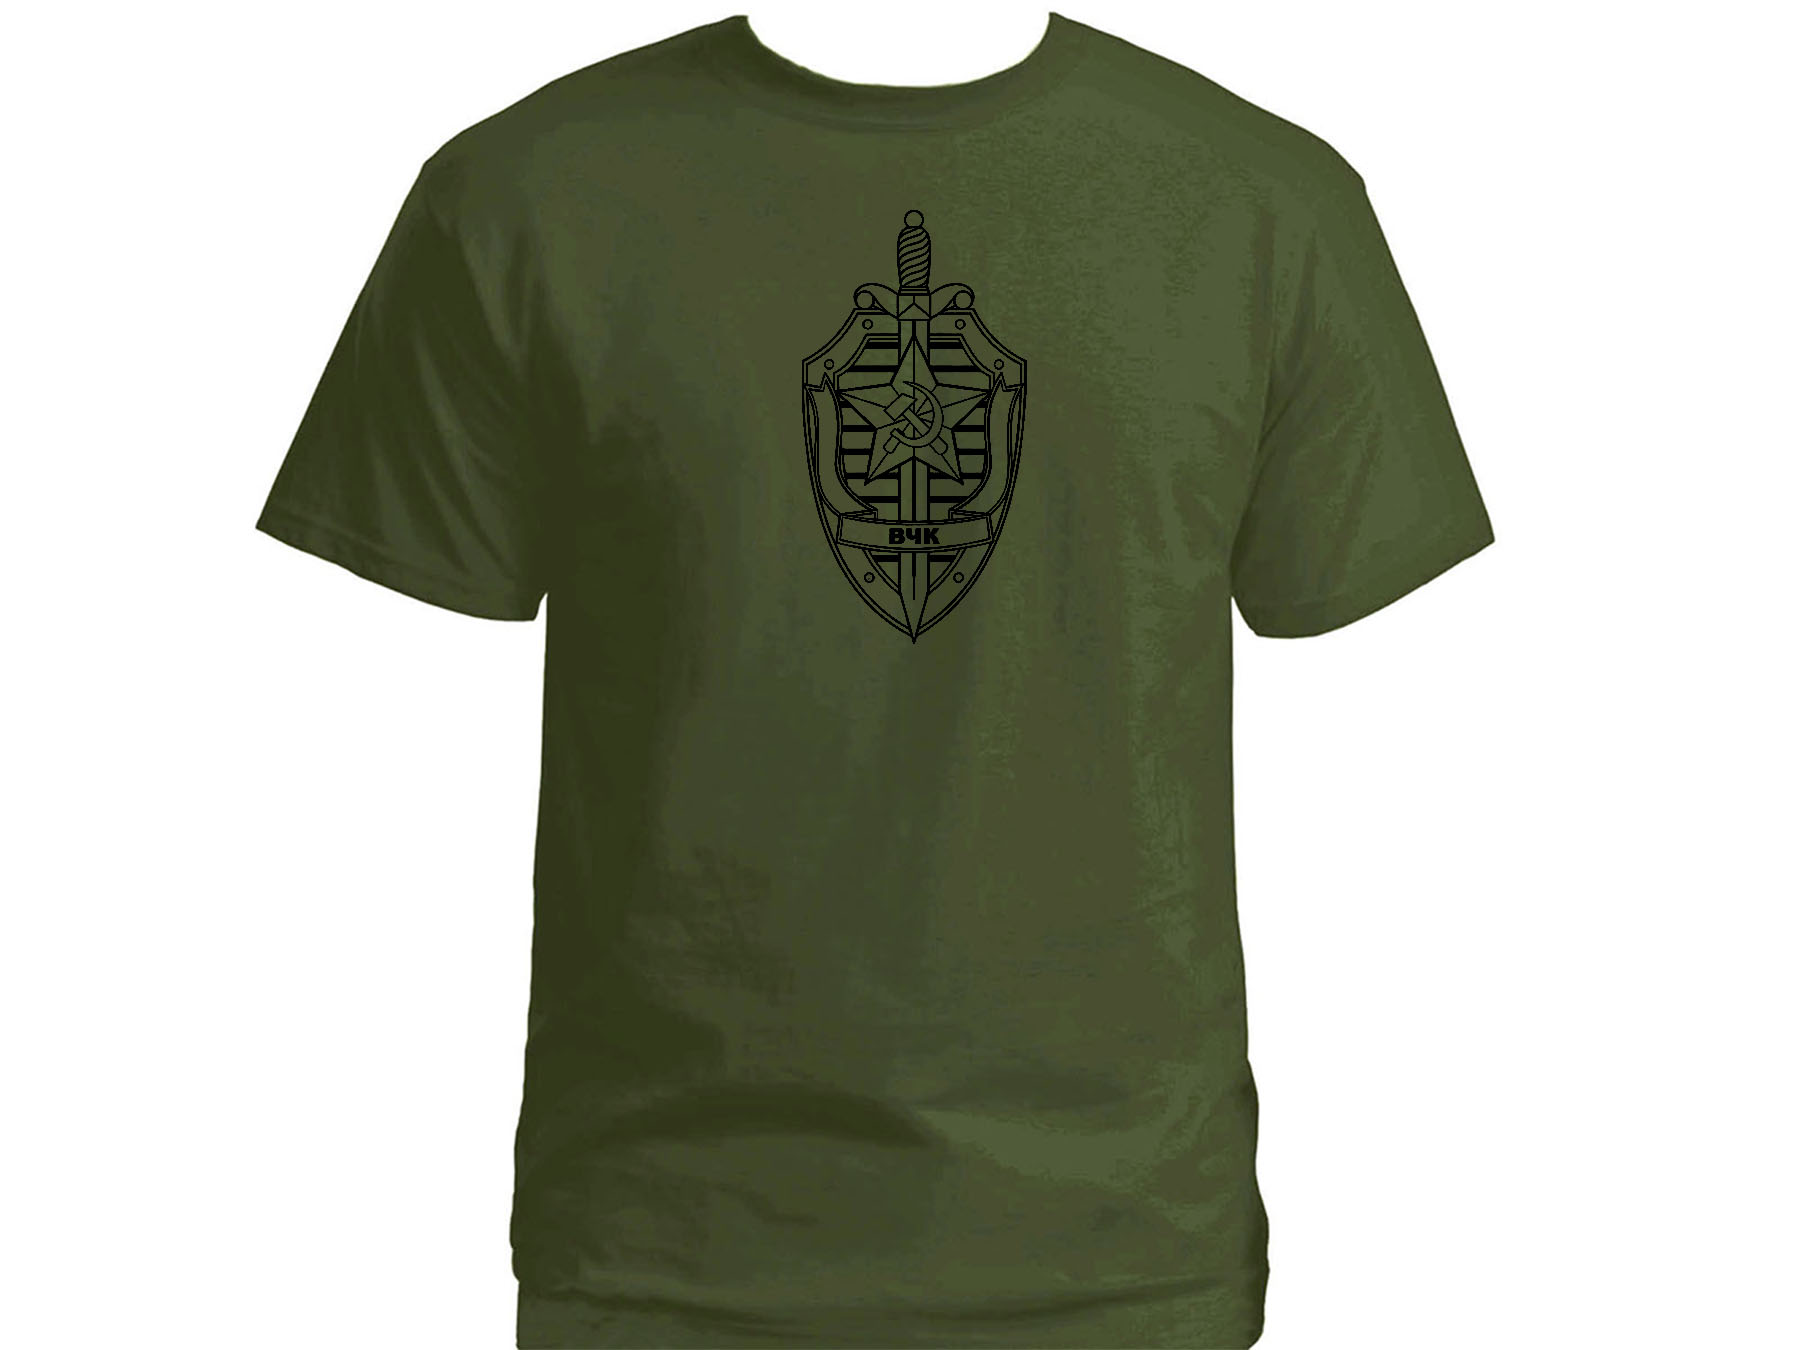 Russian Cheka Vecheka chekist Lenin security organization army green t-shirt